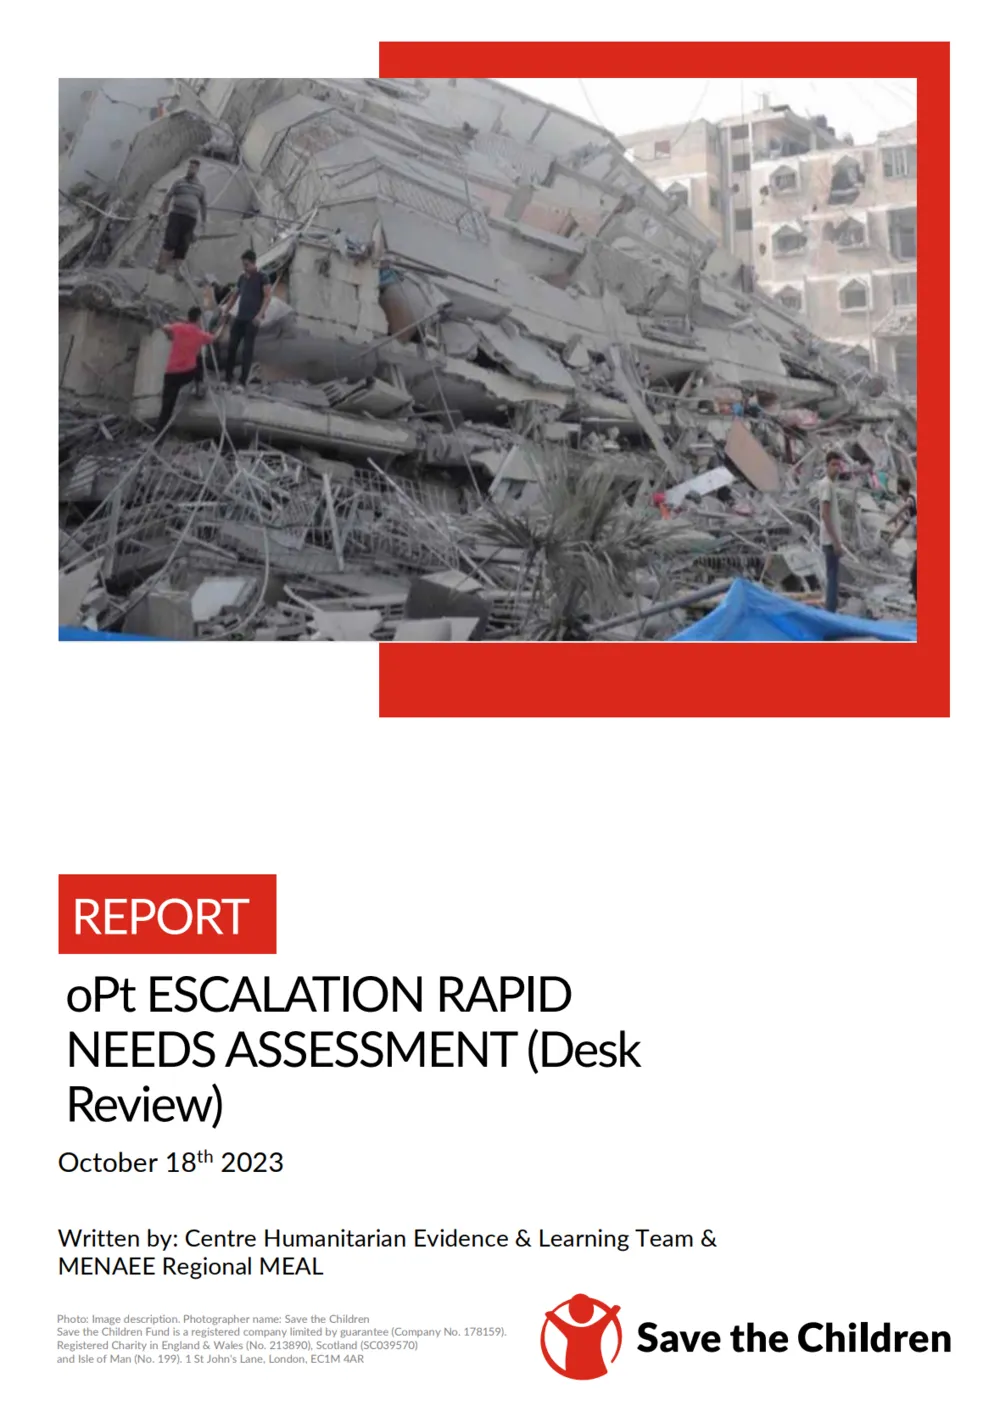 oPt Escalation Rapid Needs Assessment - Desk Review